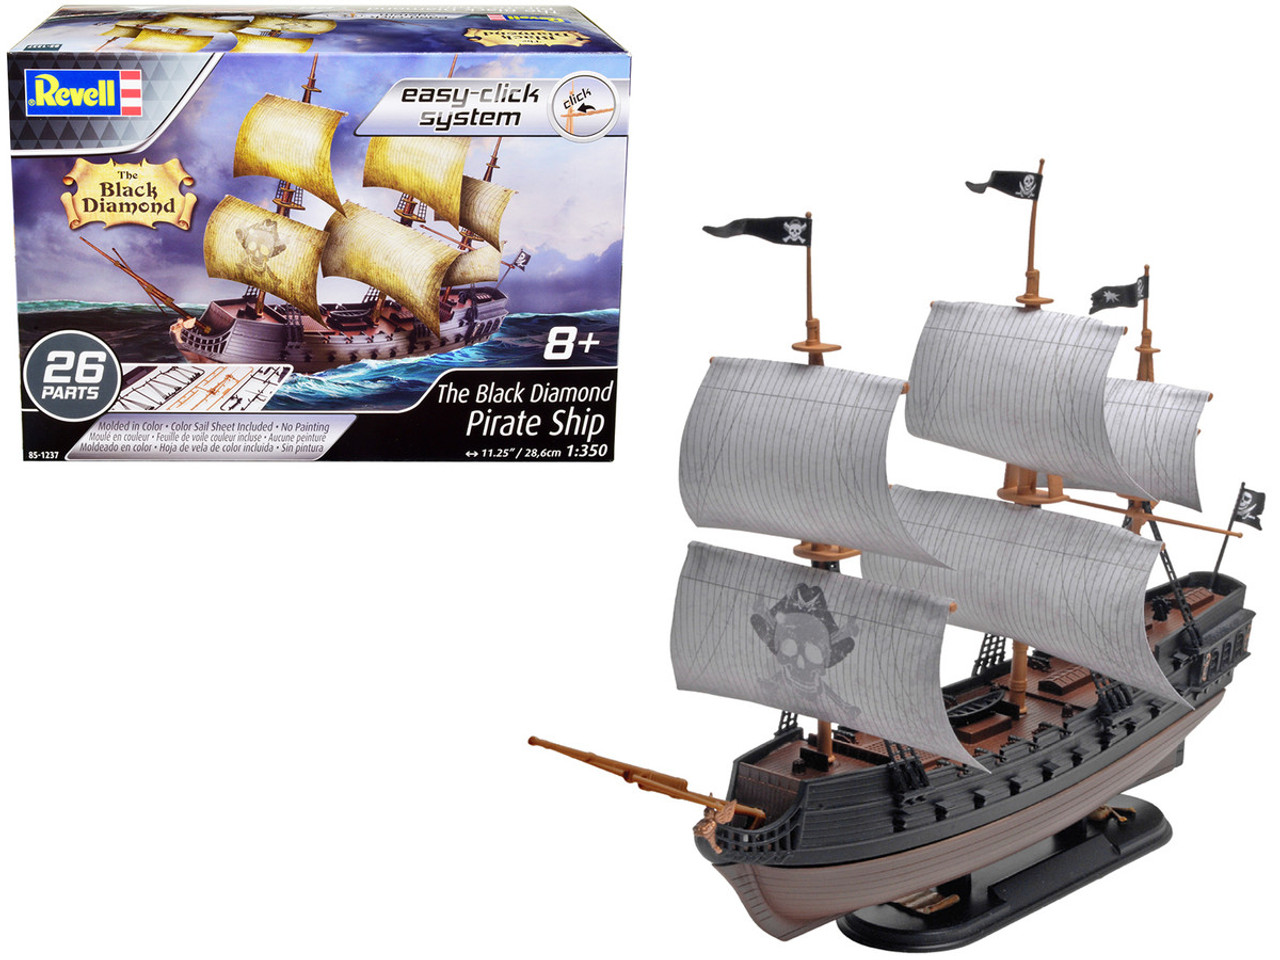 Revell 1/350 Scale Model Kit - Level 2 Easy-Click The Black Diamond Pirate Ship